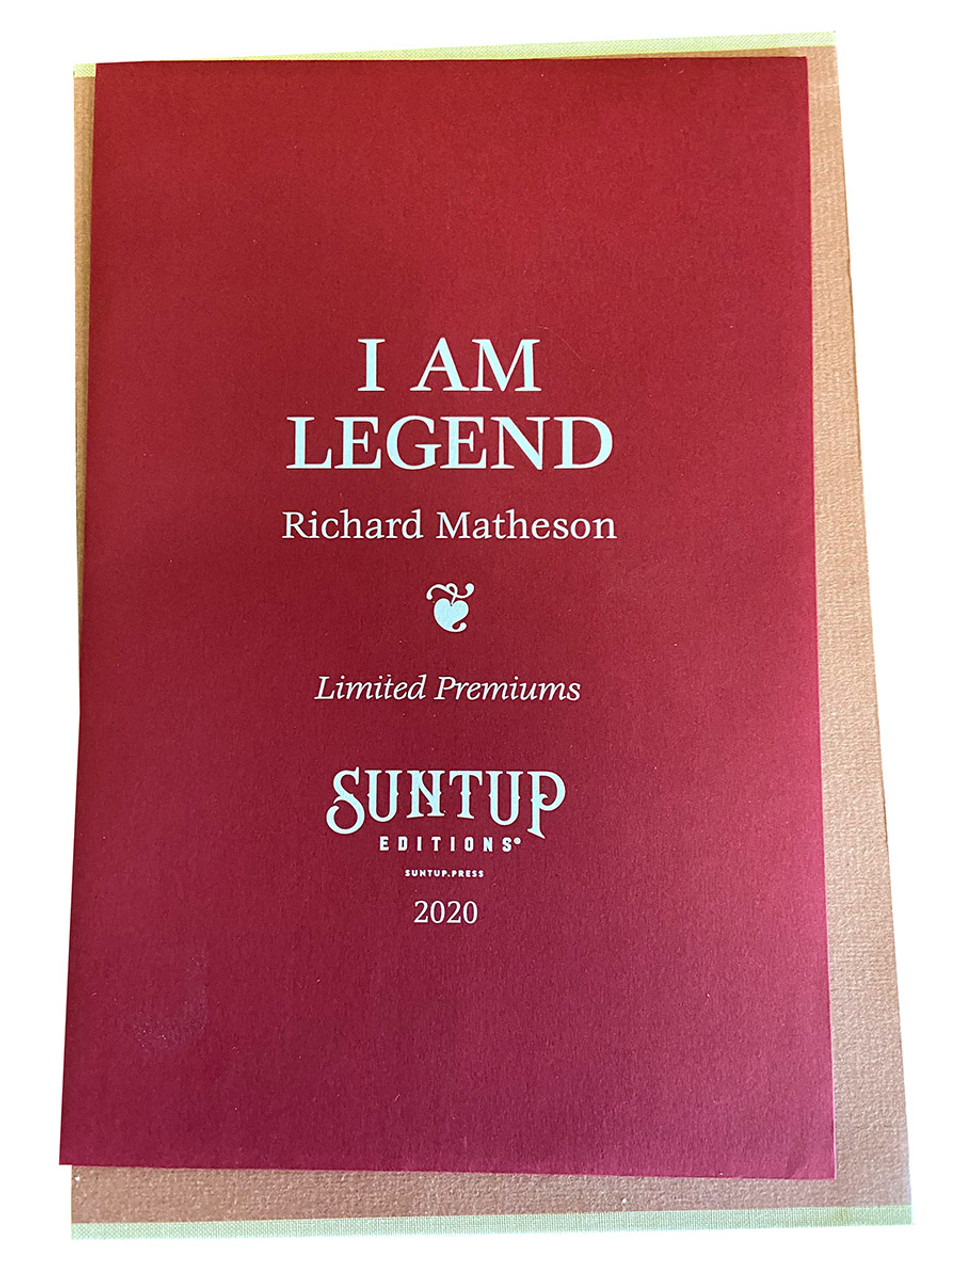 Richard Matheson "I Am Legend" Signed Limited Edition No. 71 of 250 , Slipcased [Very Fine]